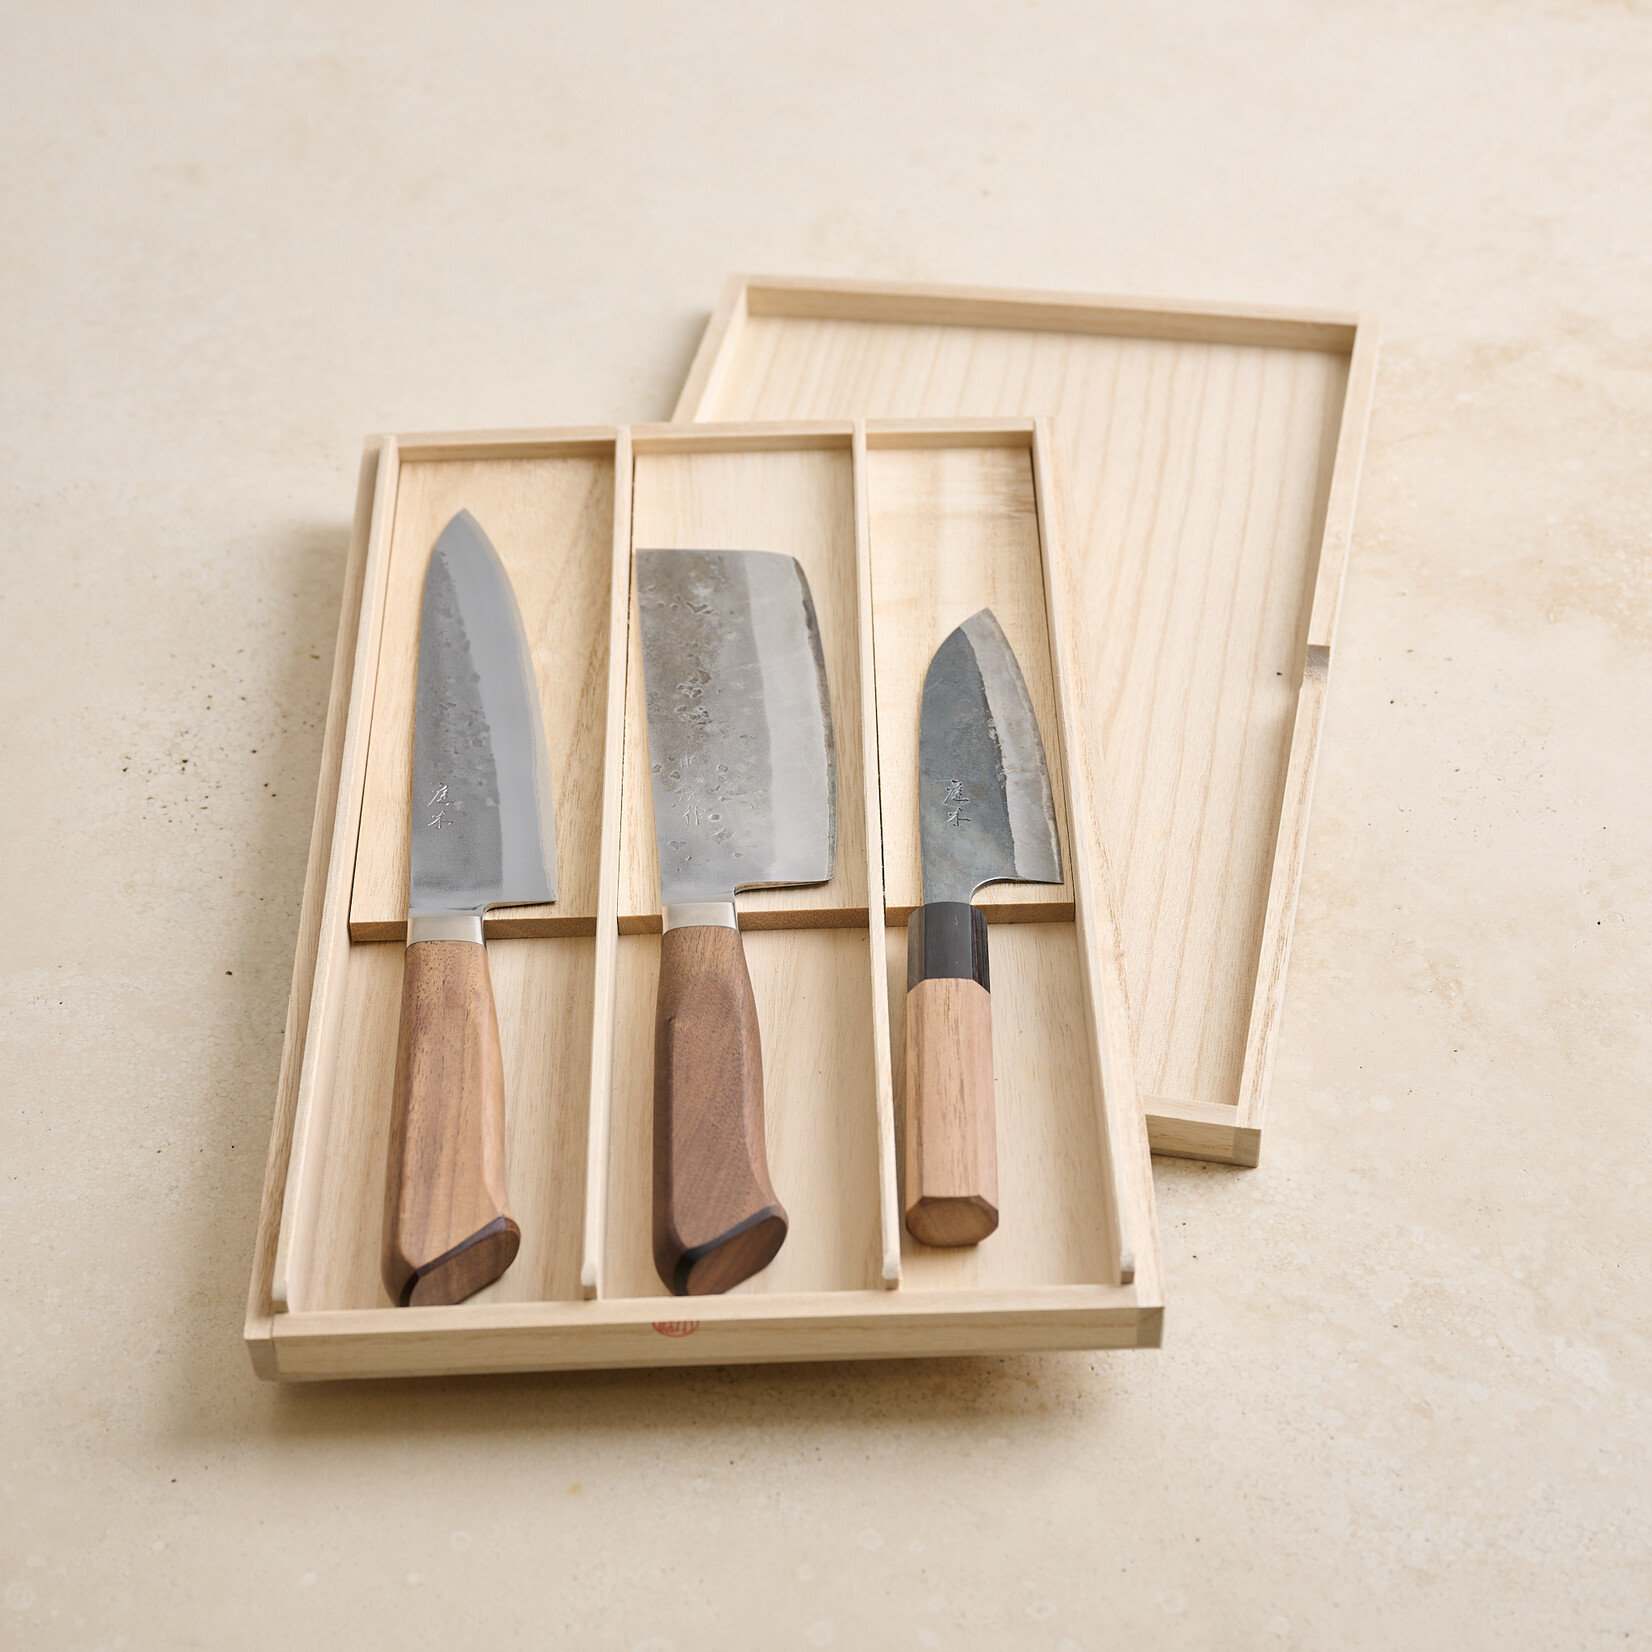 Japanese Western style Carbon Steel Kitchen Knife - sujuhiki 240 mm